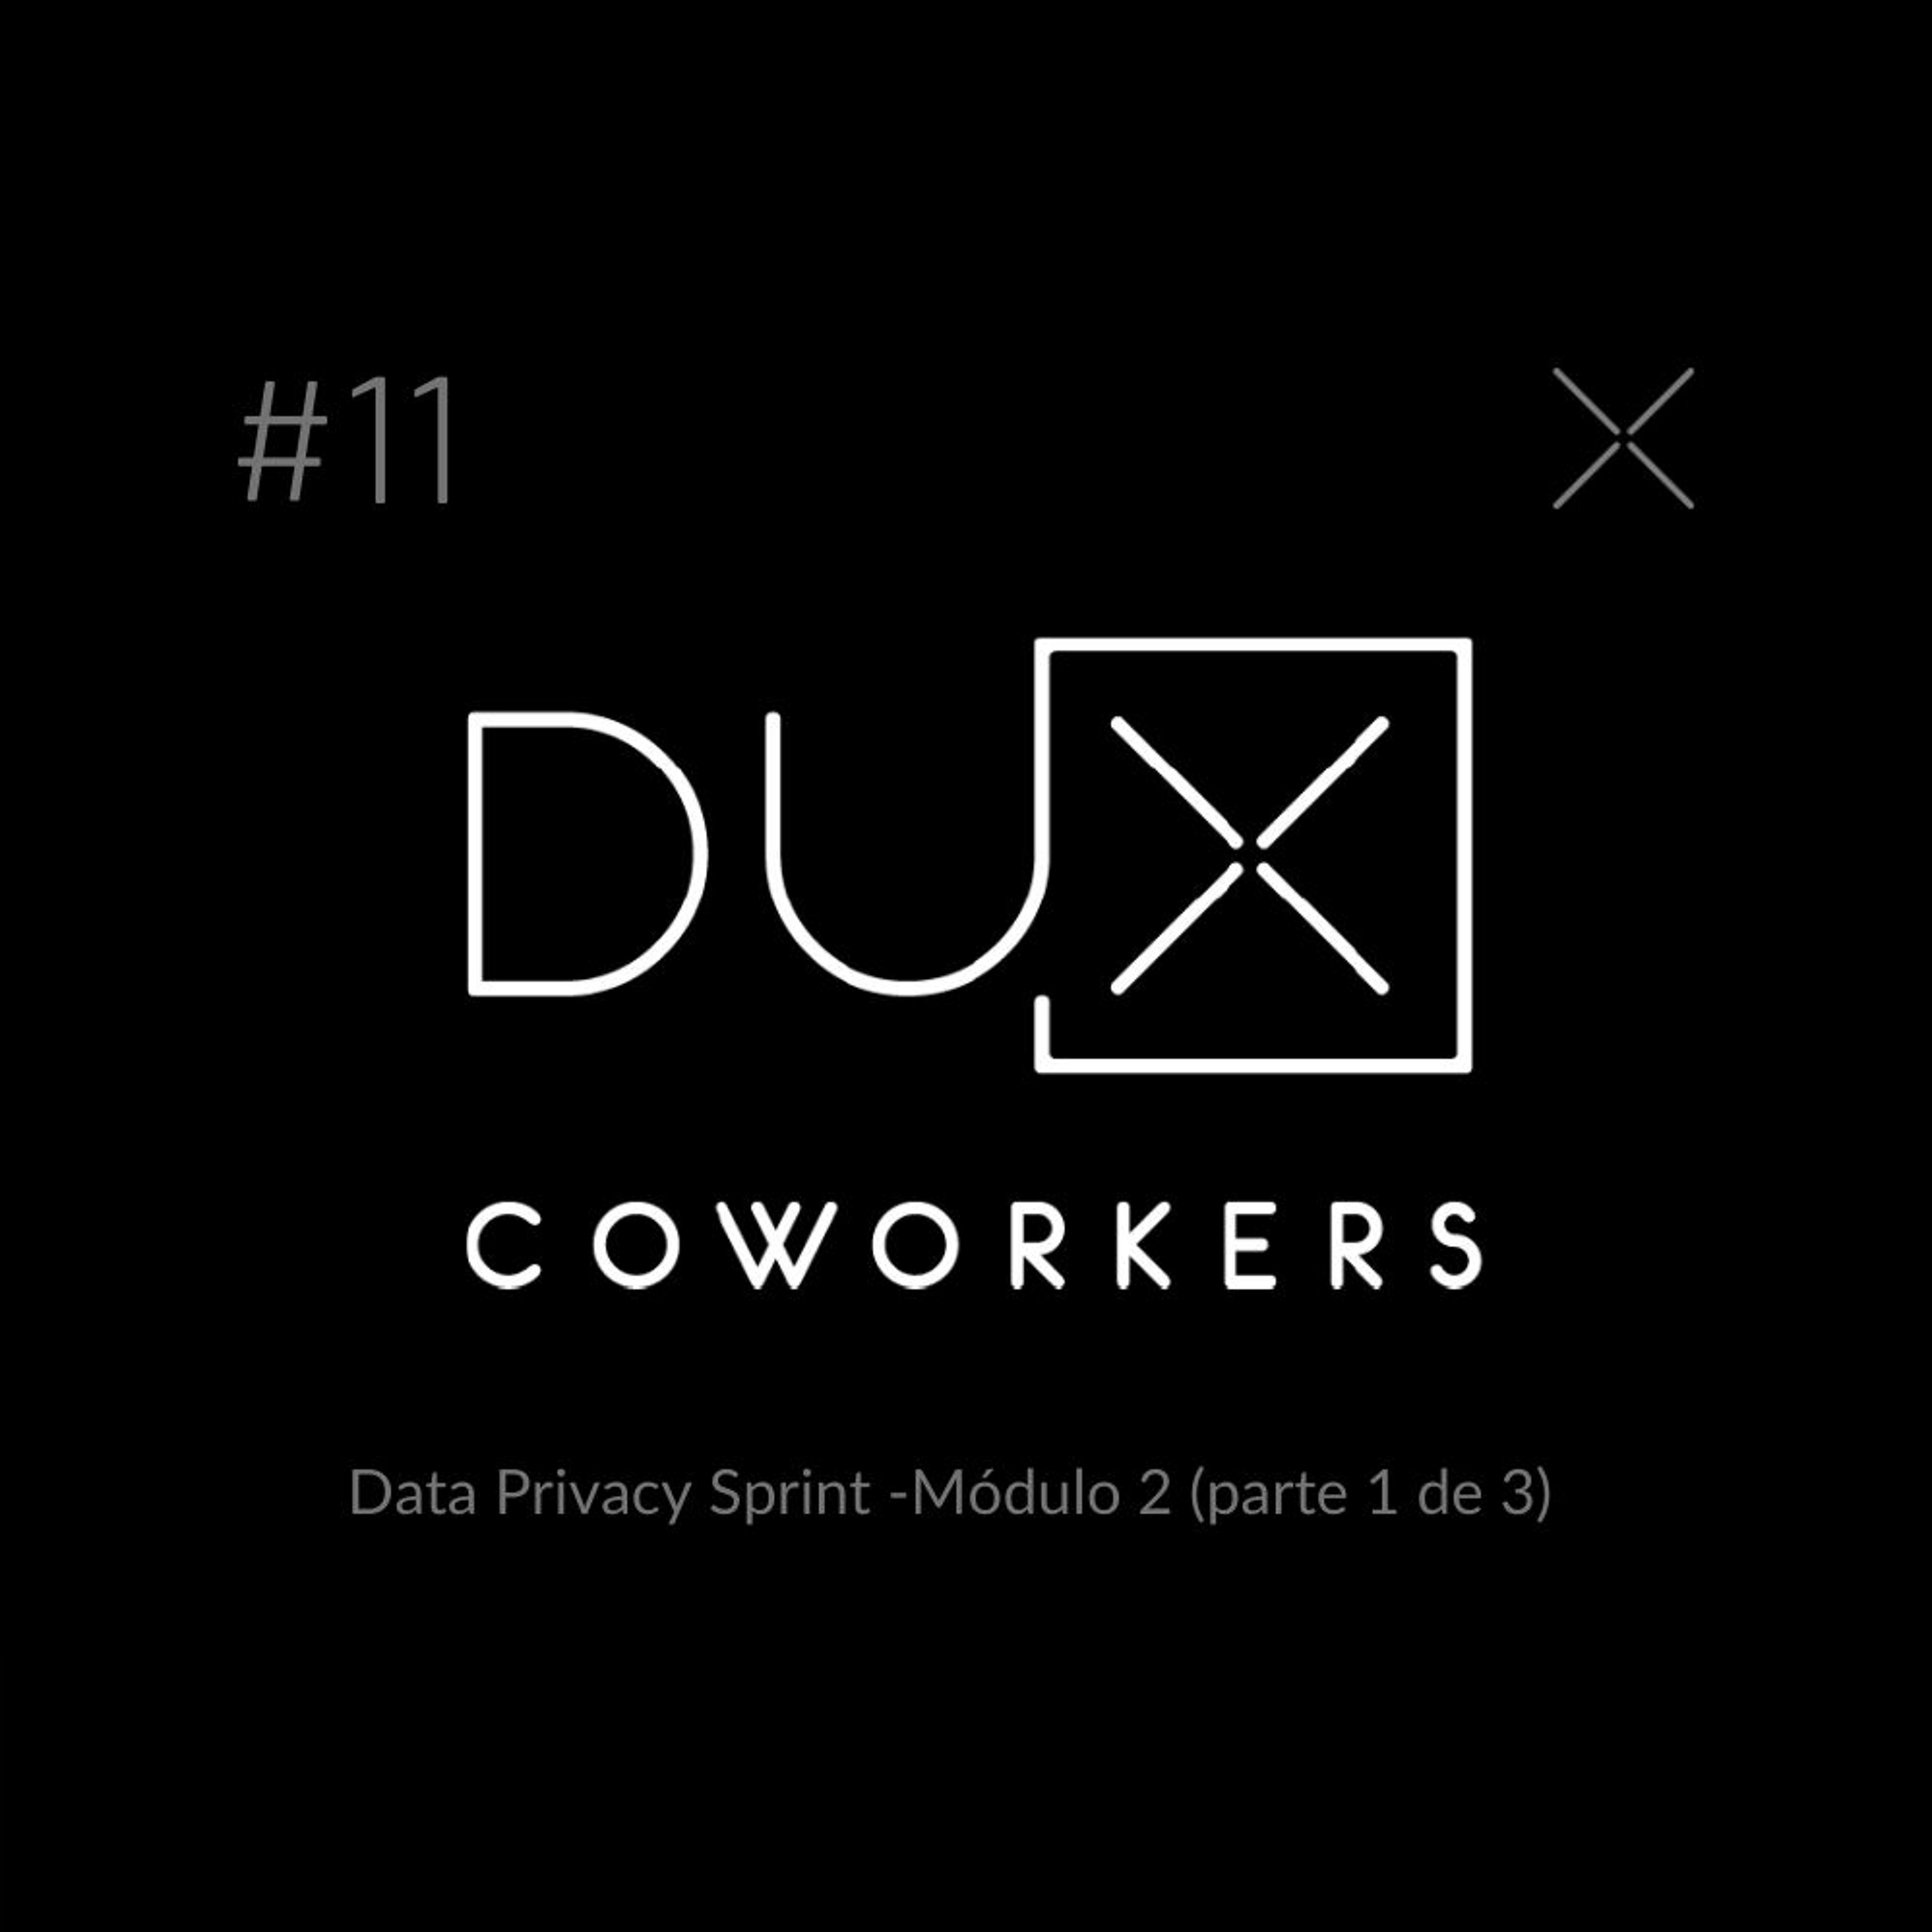 022- DUX#11 - Data Privacy Sprint Modulo 2  (1)